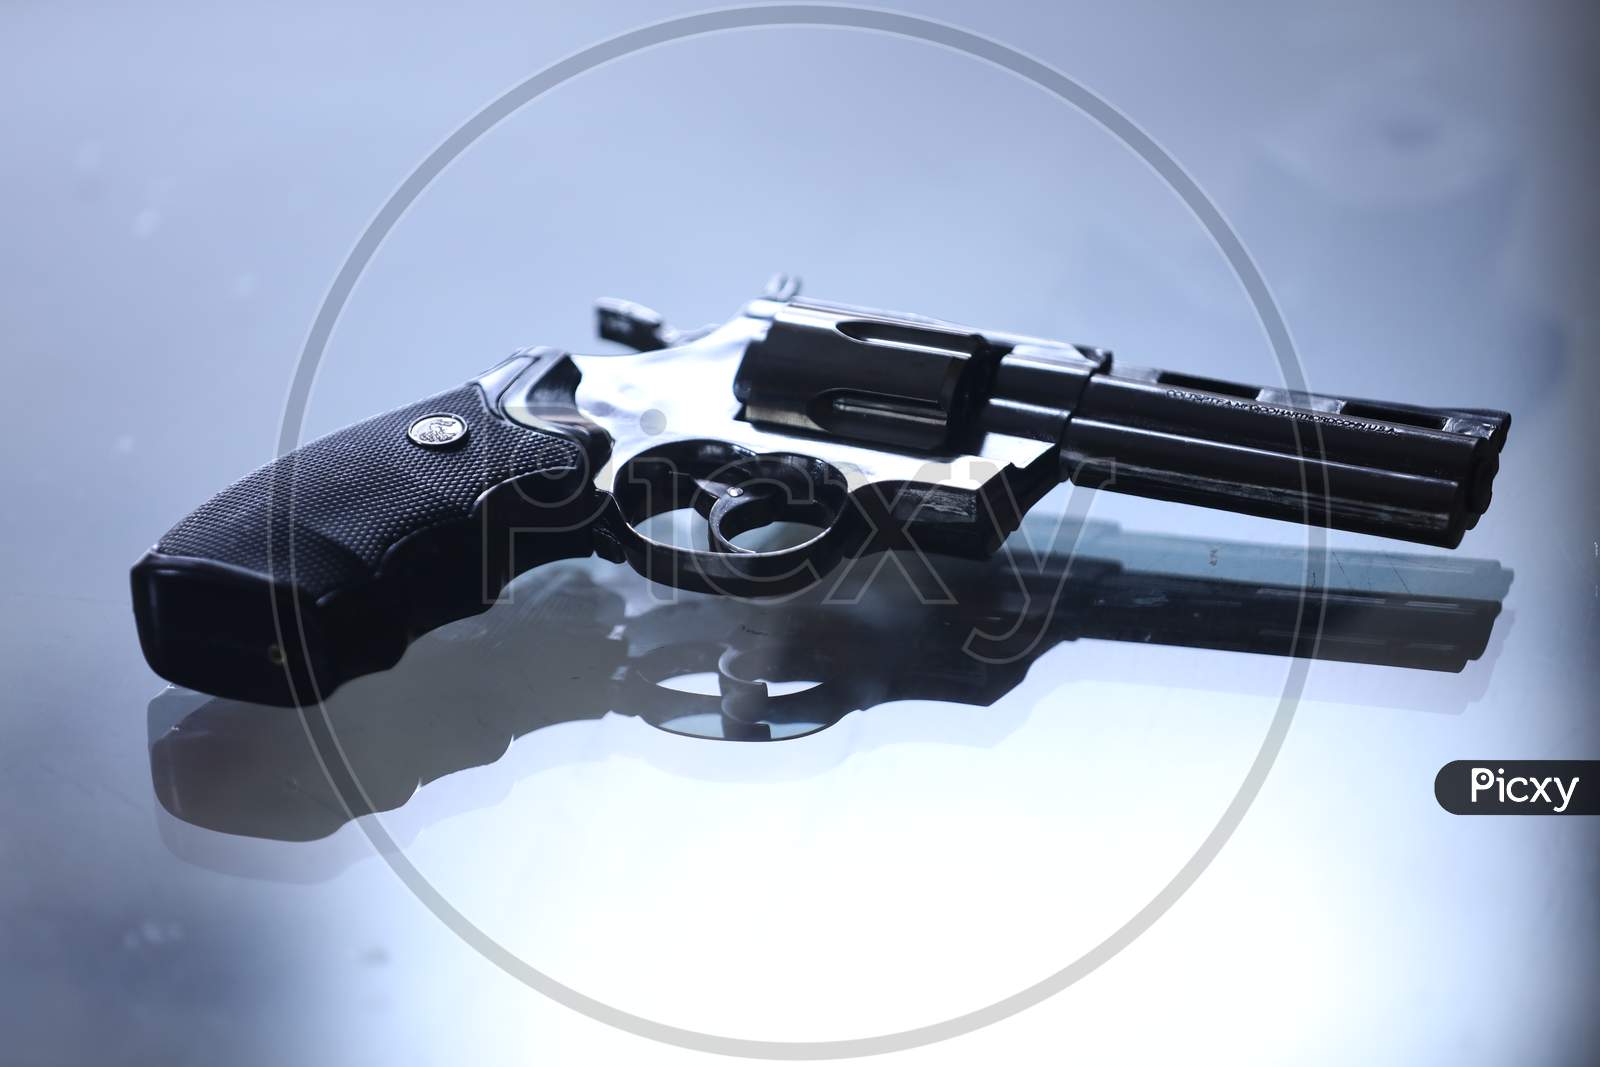 Pistol Or Gun  On an White Table Background